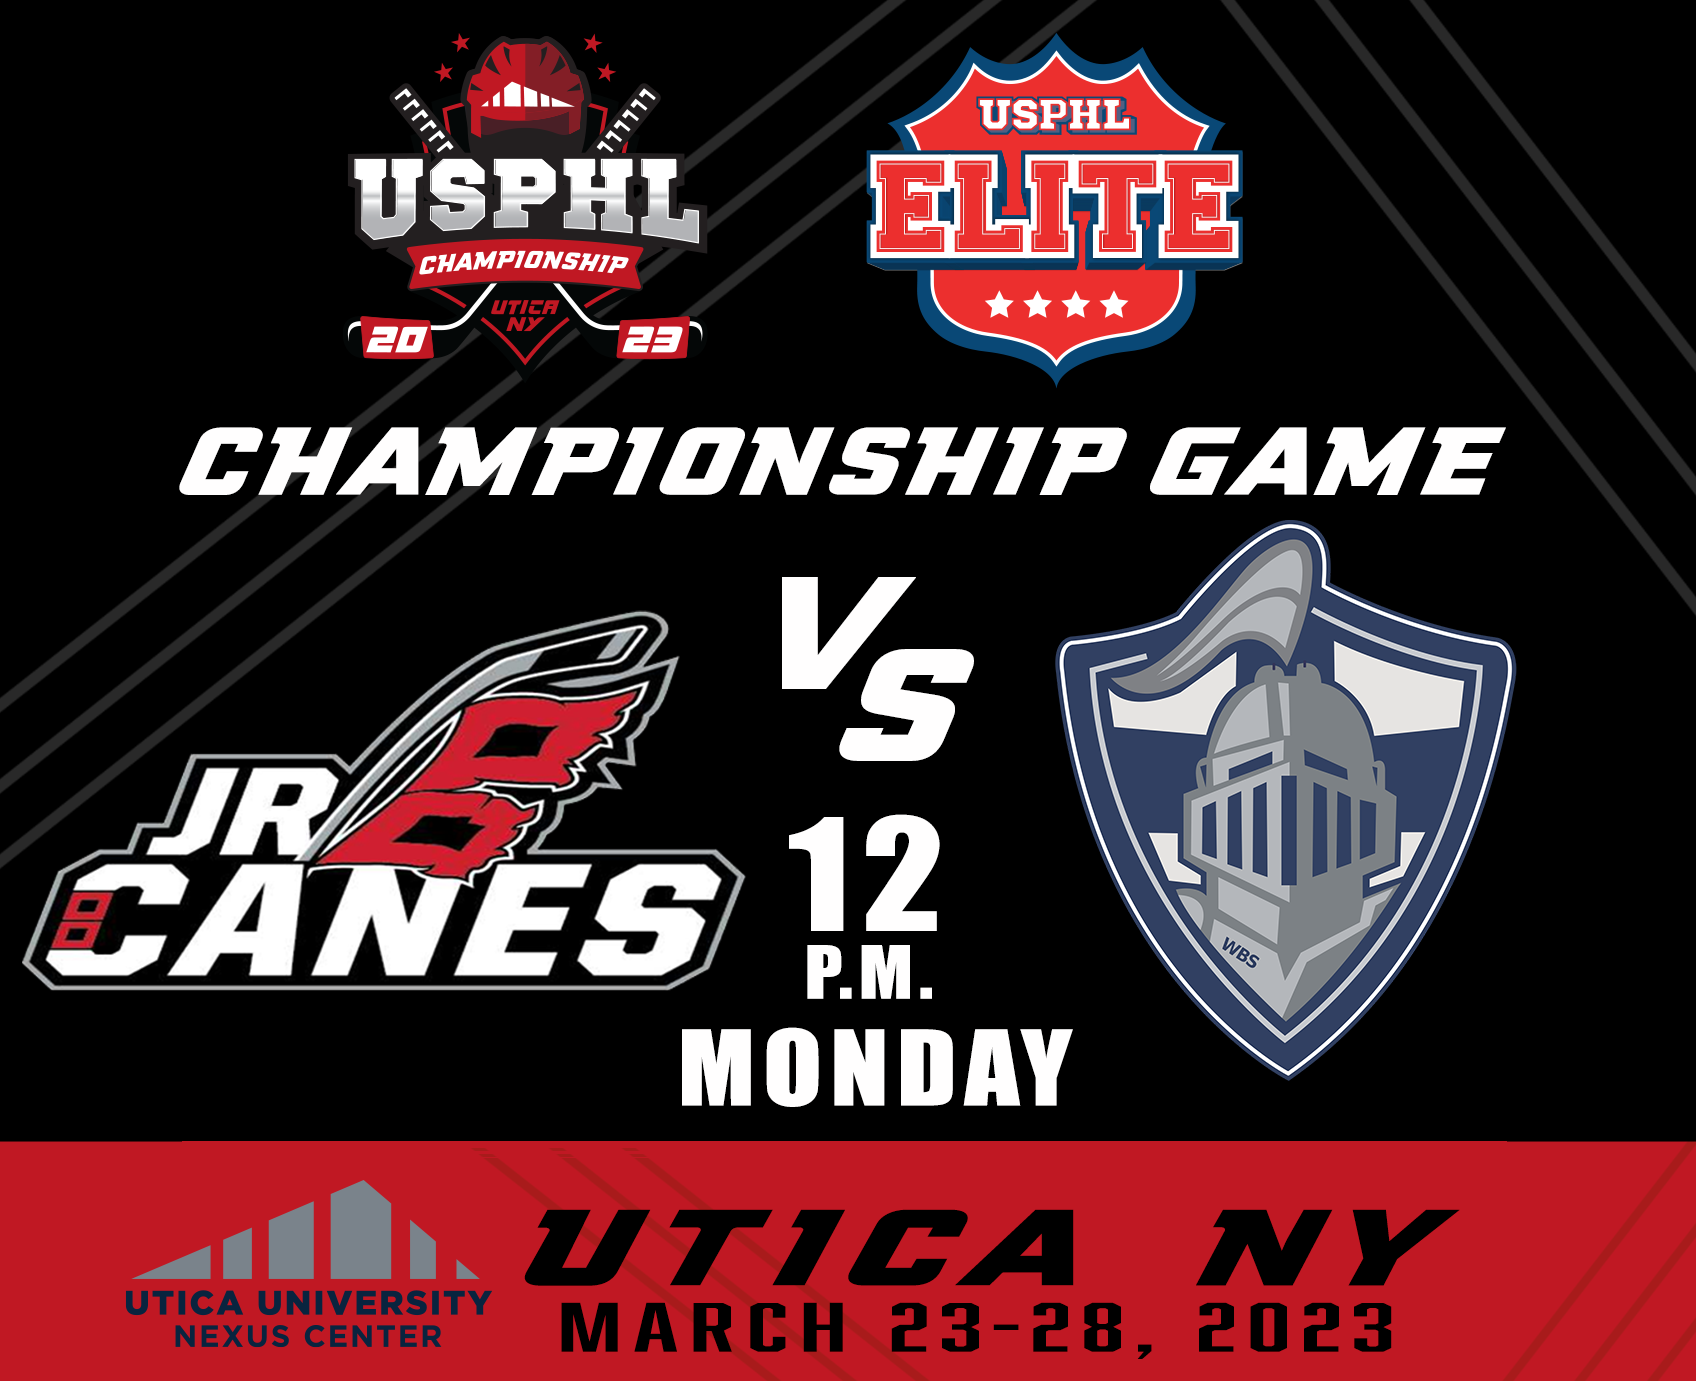 USPHL Elite Final On Monday To Feature WBS Knights vs. Carolina Jr. Hurricanes